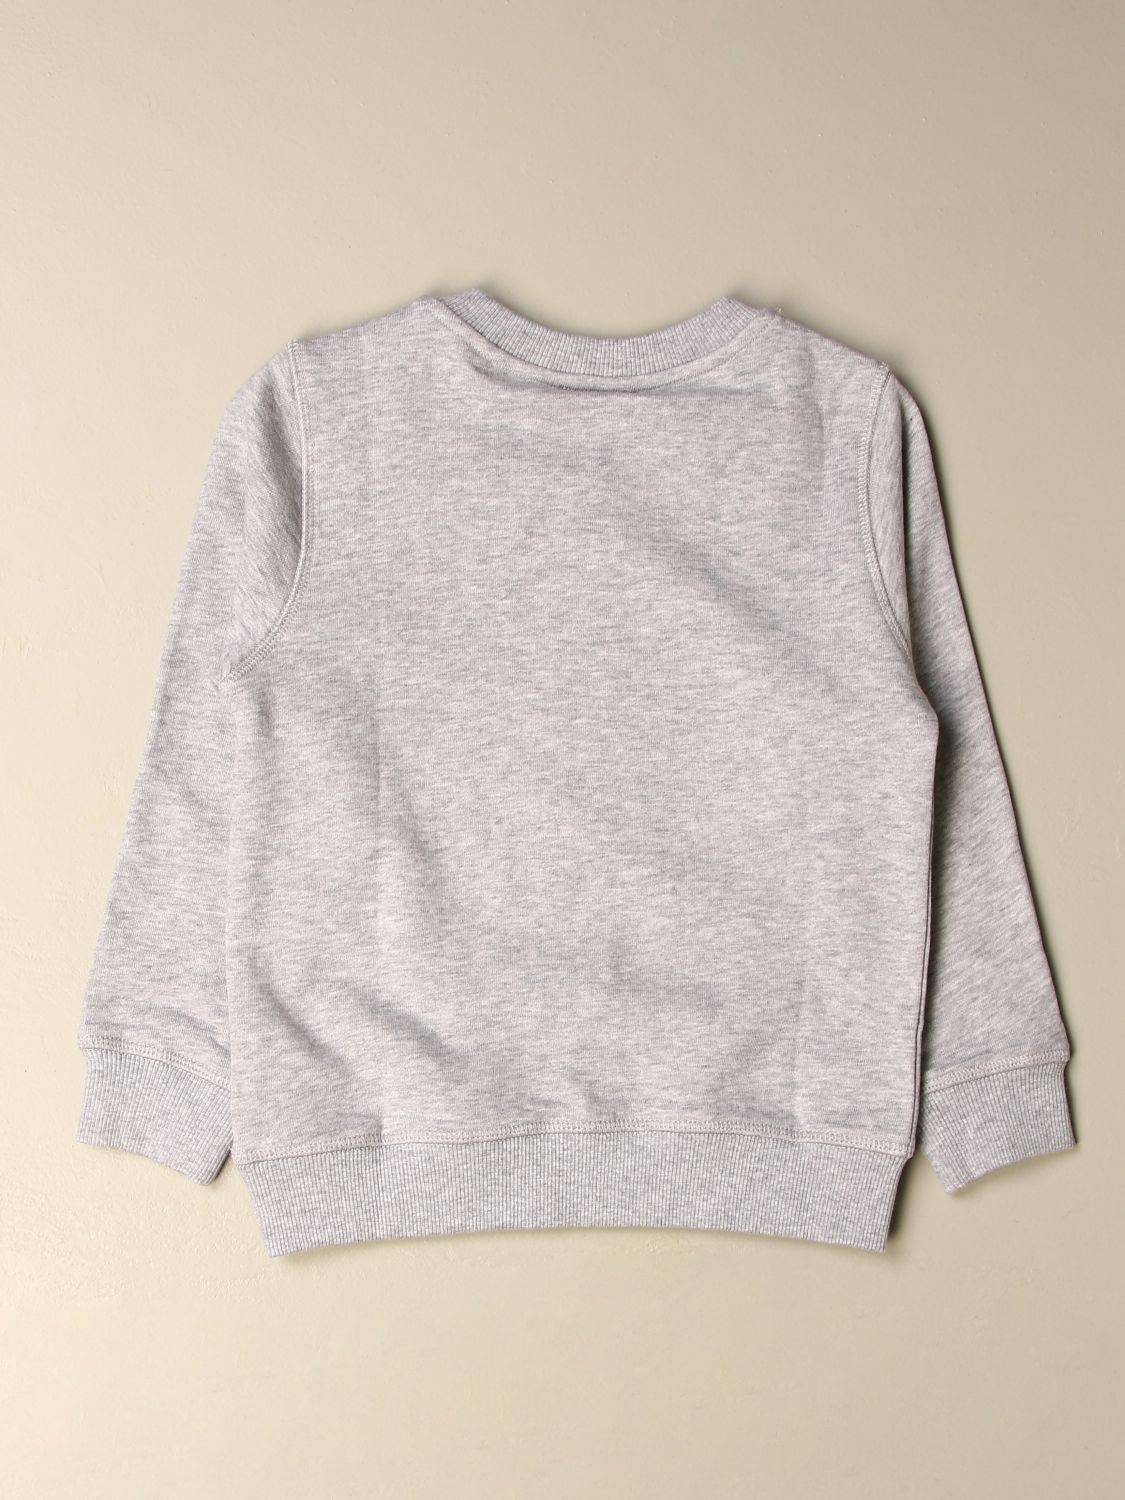 kenzo paris grey sweatshirt